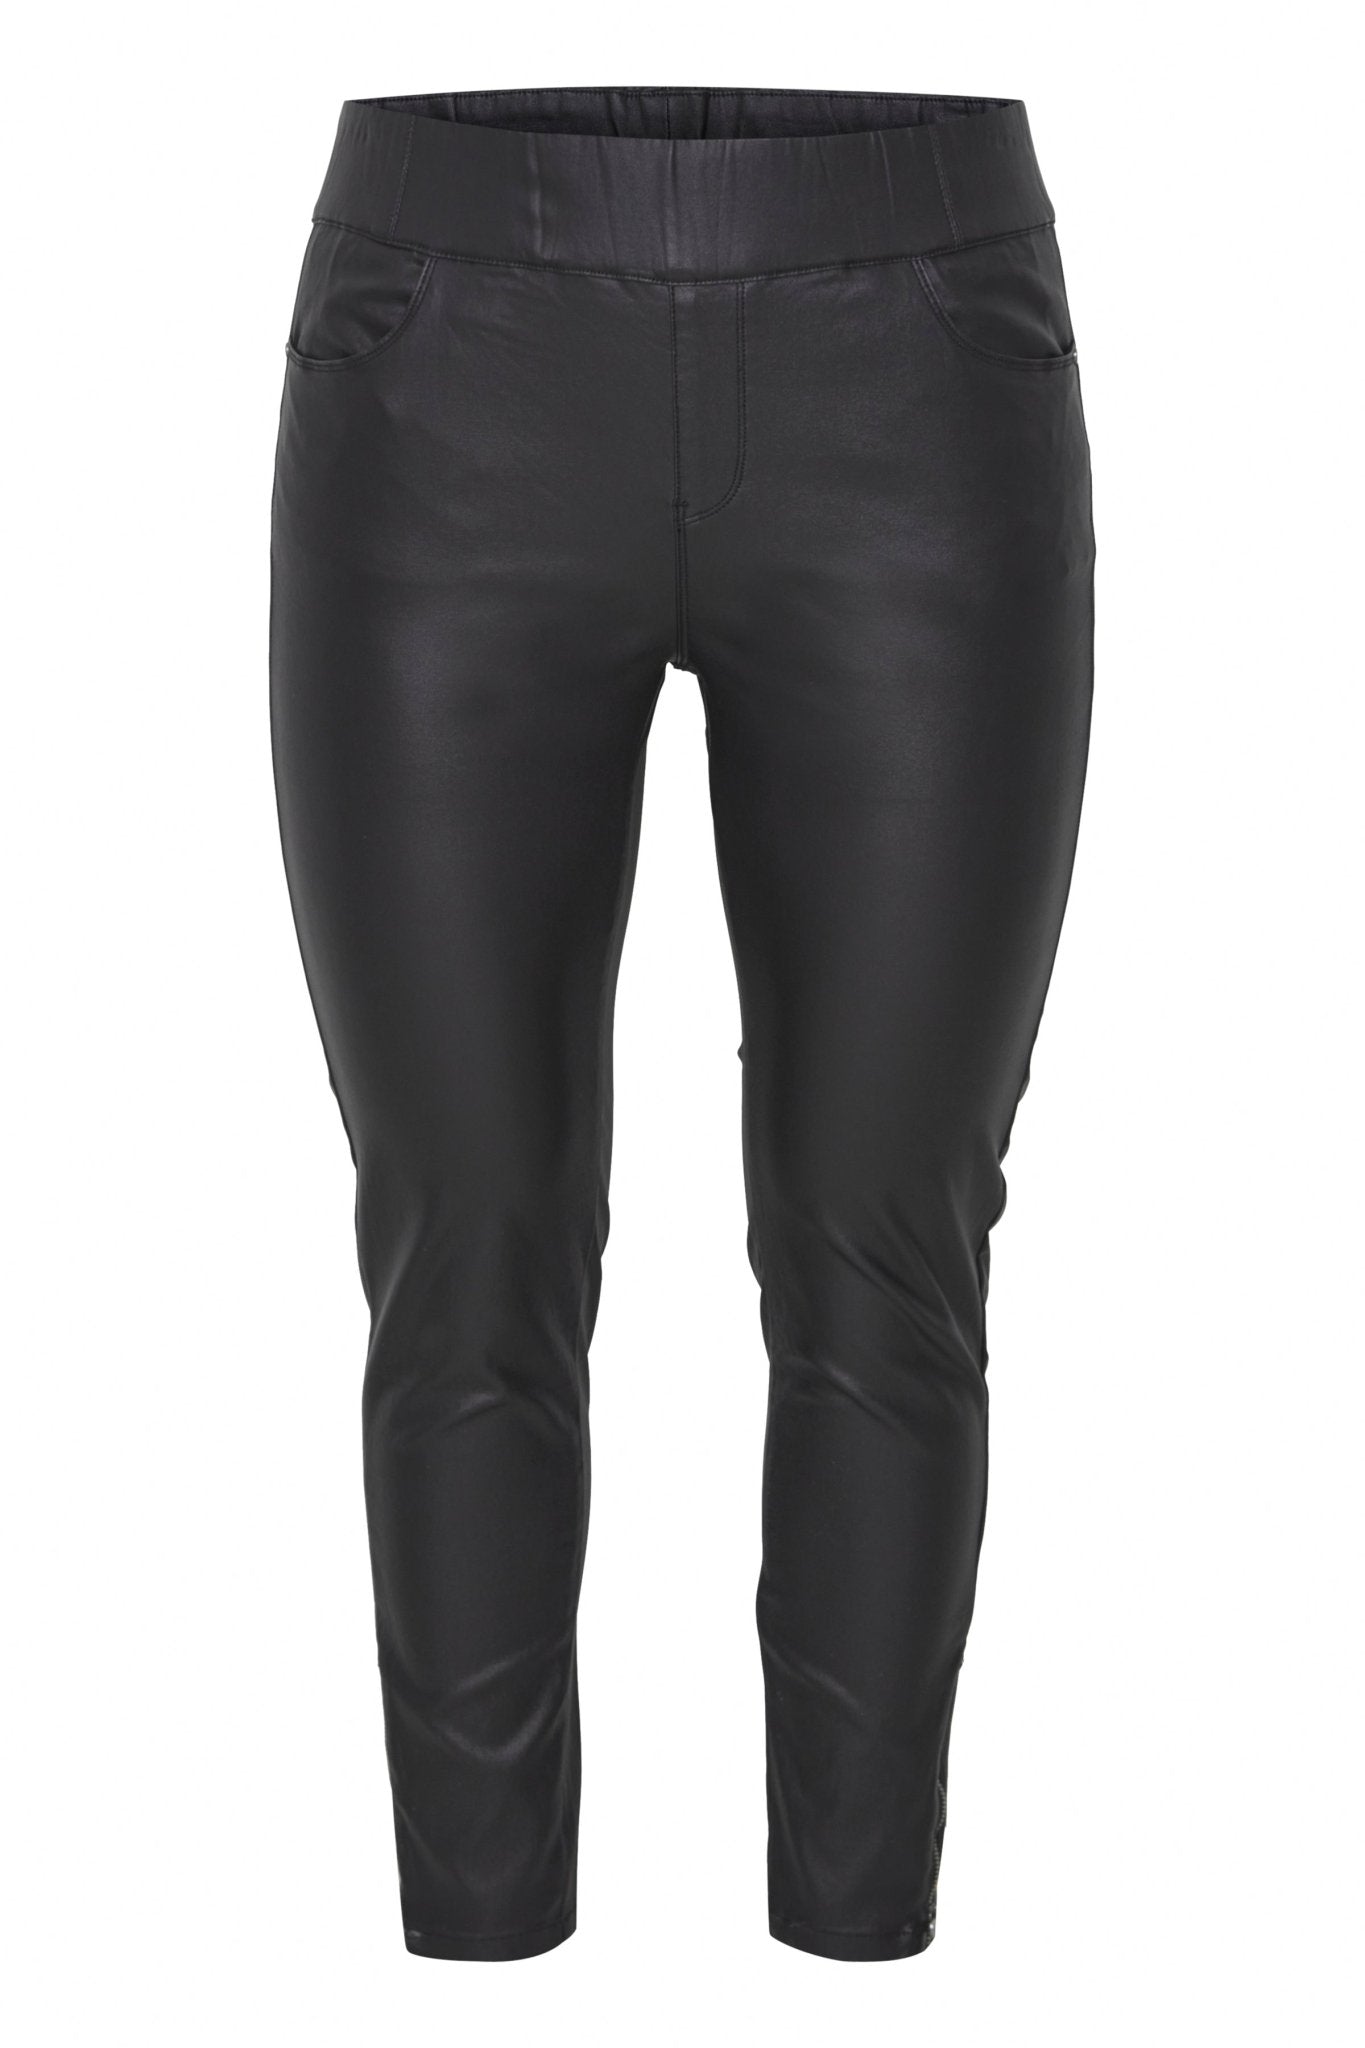 Malin leggings by Fransa Plus - black - Blue Sky Fashions & Lingerie